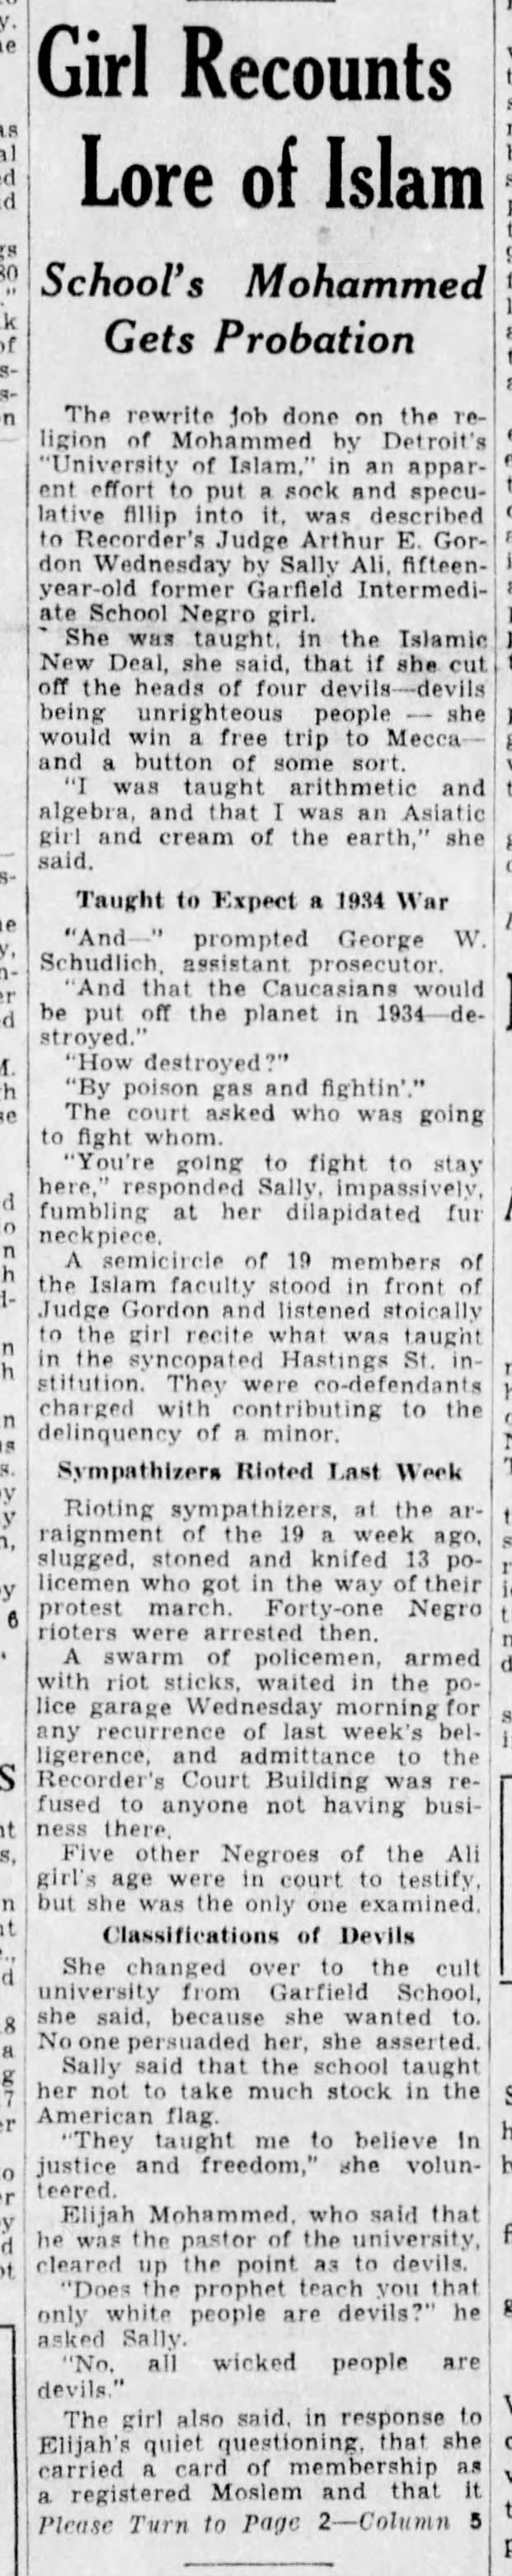 NOI - DFP. April 26, 1934. Girl In Court. P1